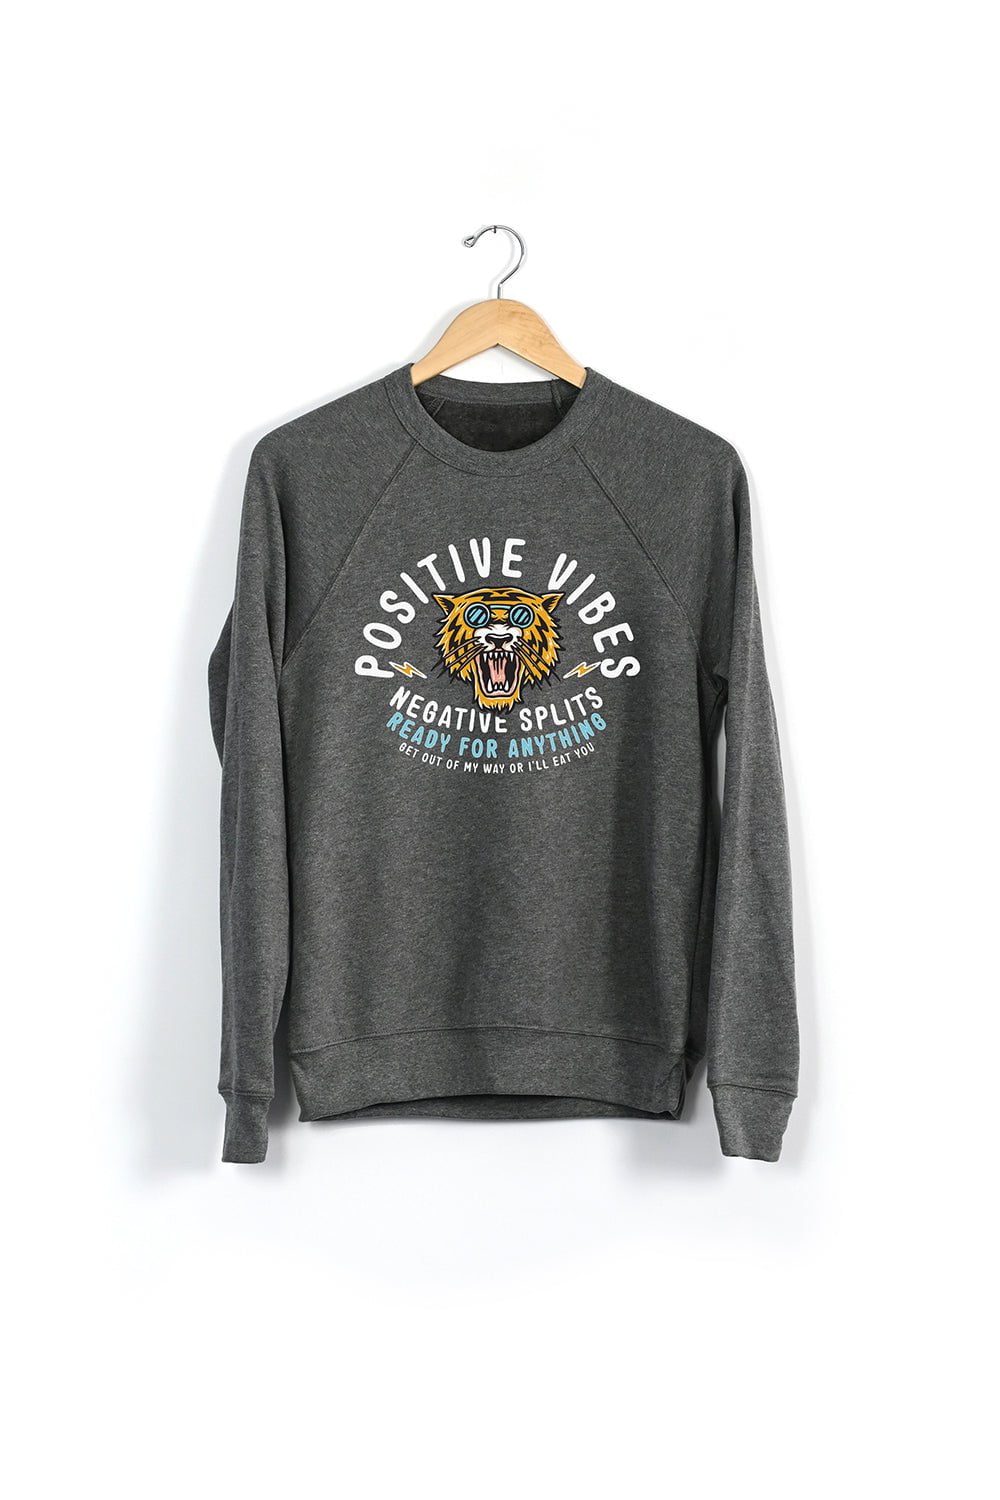 Sarah Marie Design Studio Positive Vibes, Negative Splits Tiger Sweatshirt